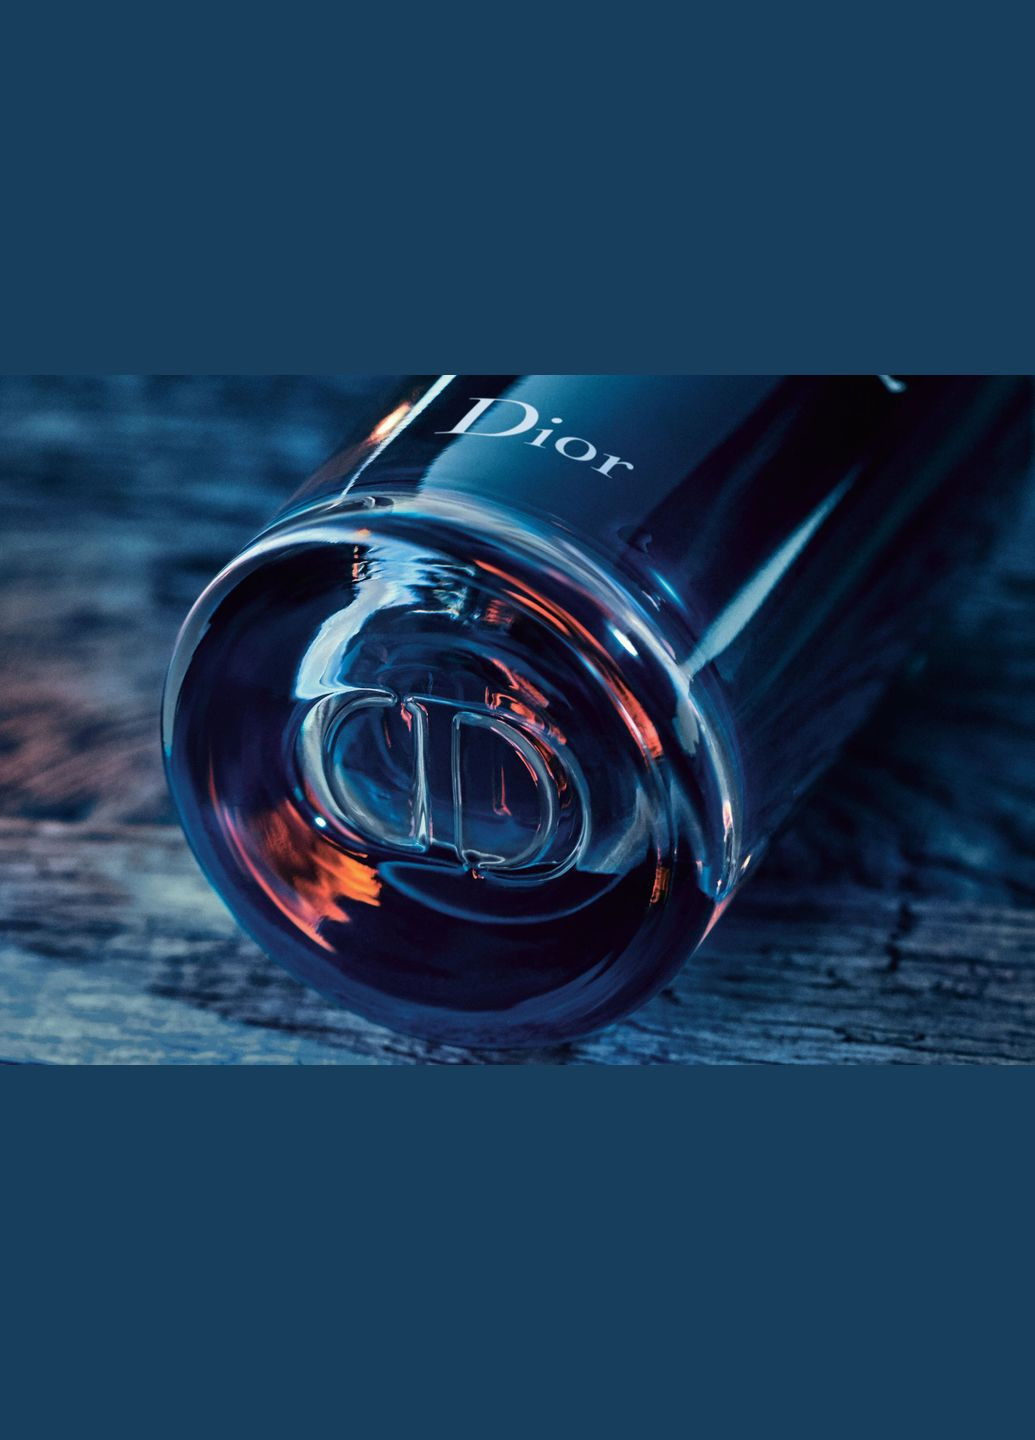 Чоловіча парфумована вода Christian Sauvage Eau de Parfum 100 мл (страна производства Турция) Dior (278773687)